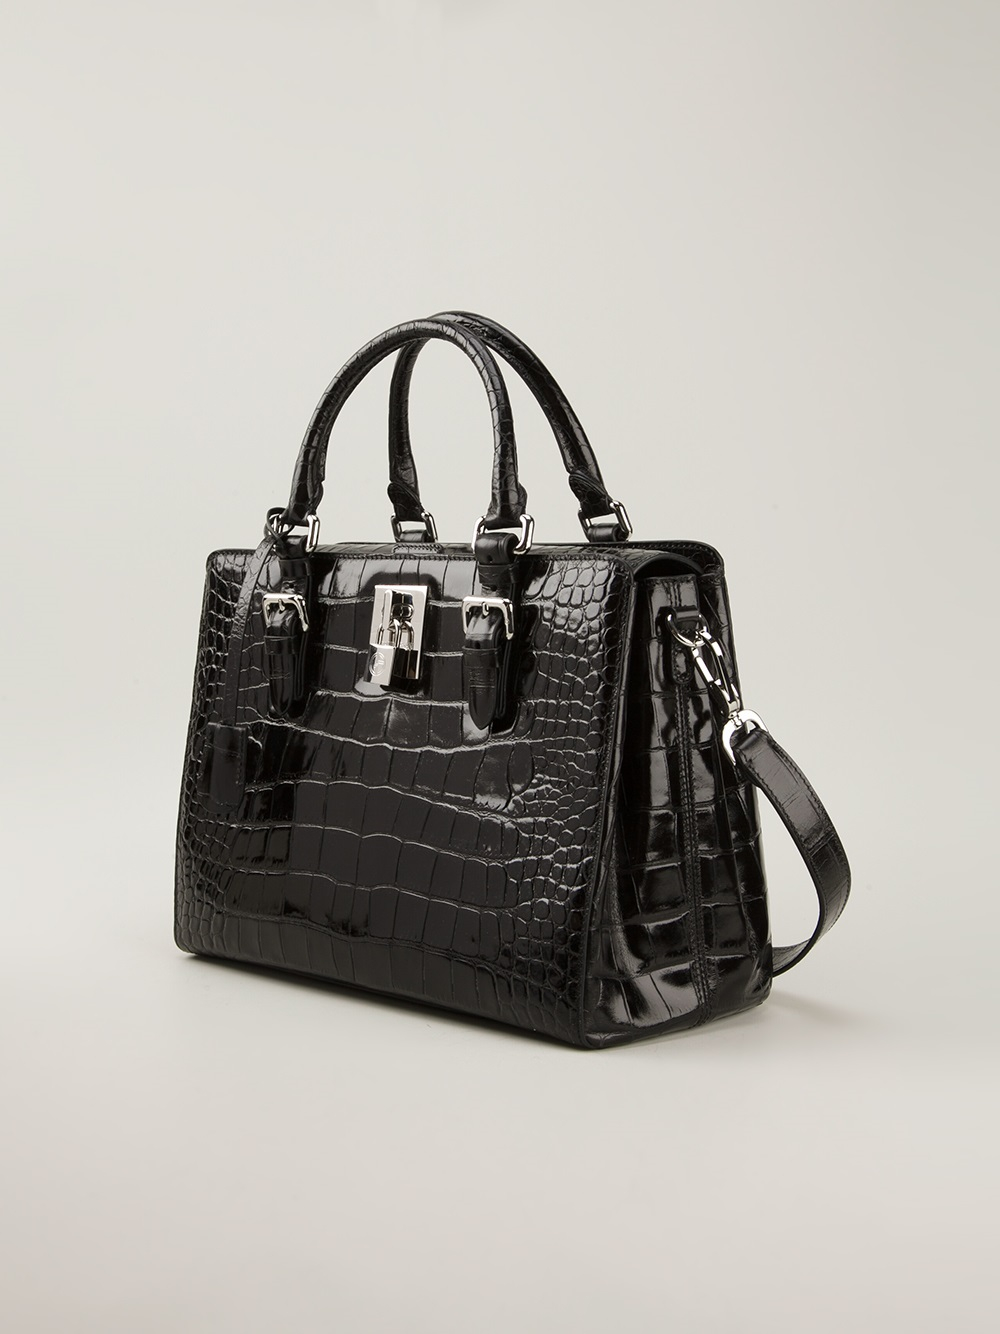 Lyst - Giorgio Armani 'Gineura' Croc Print Tote Bag in Black